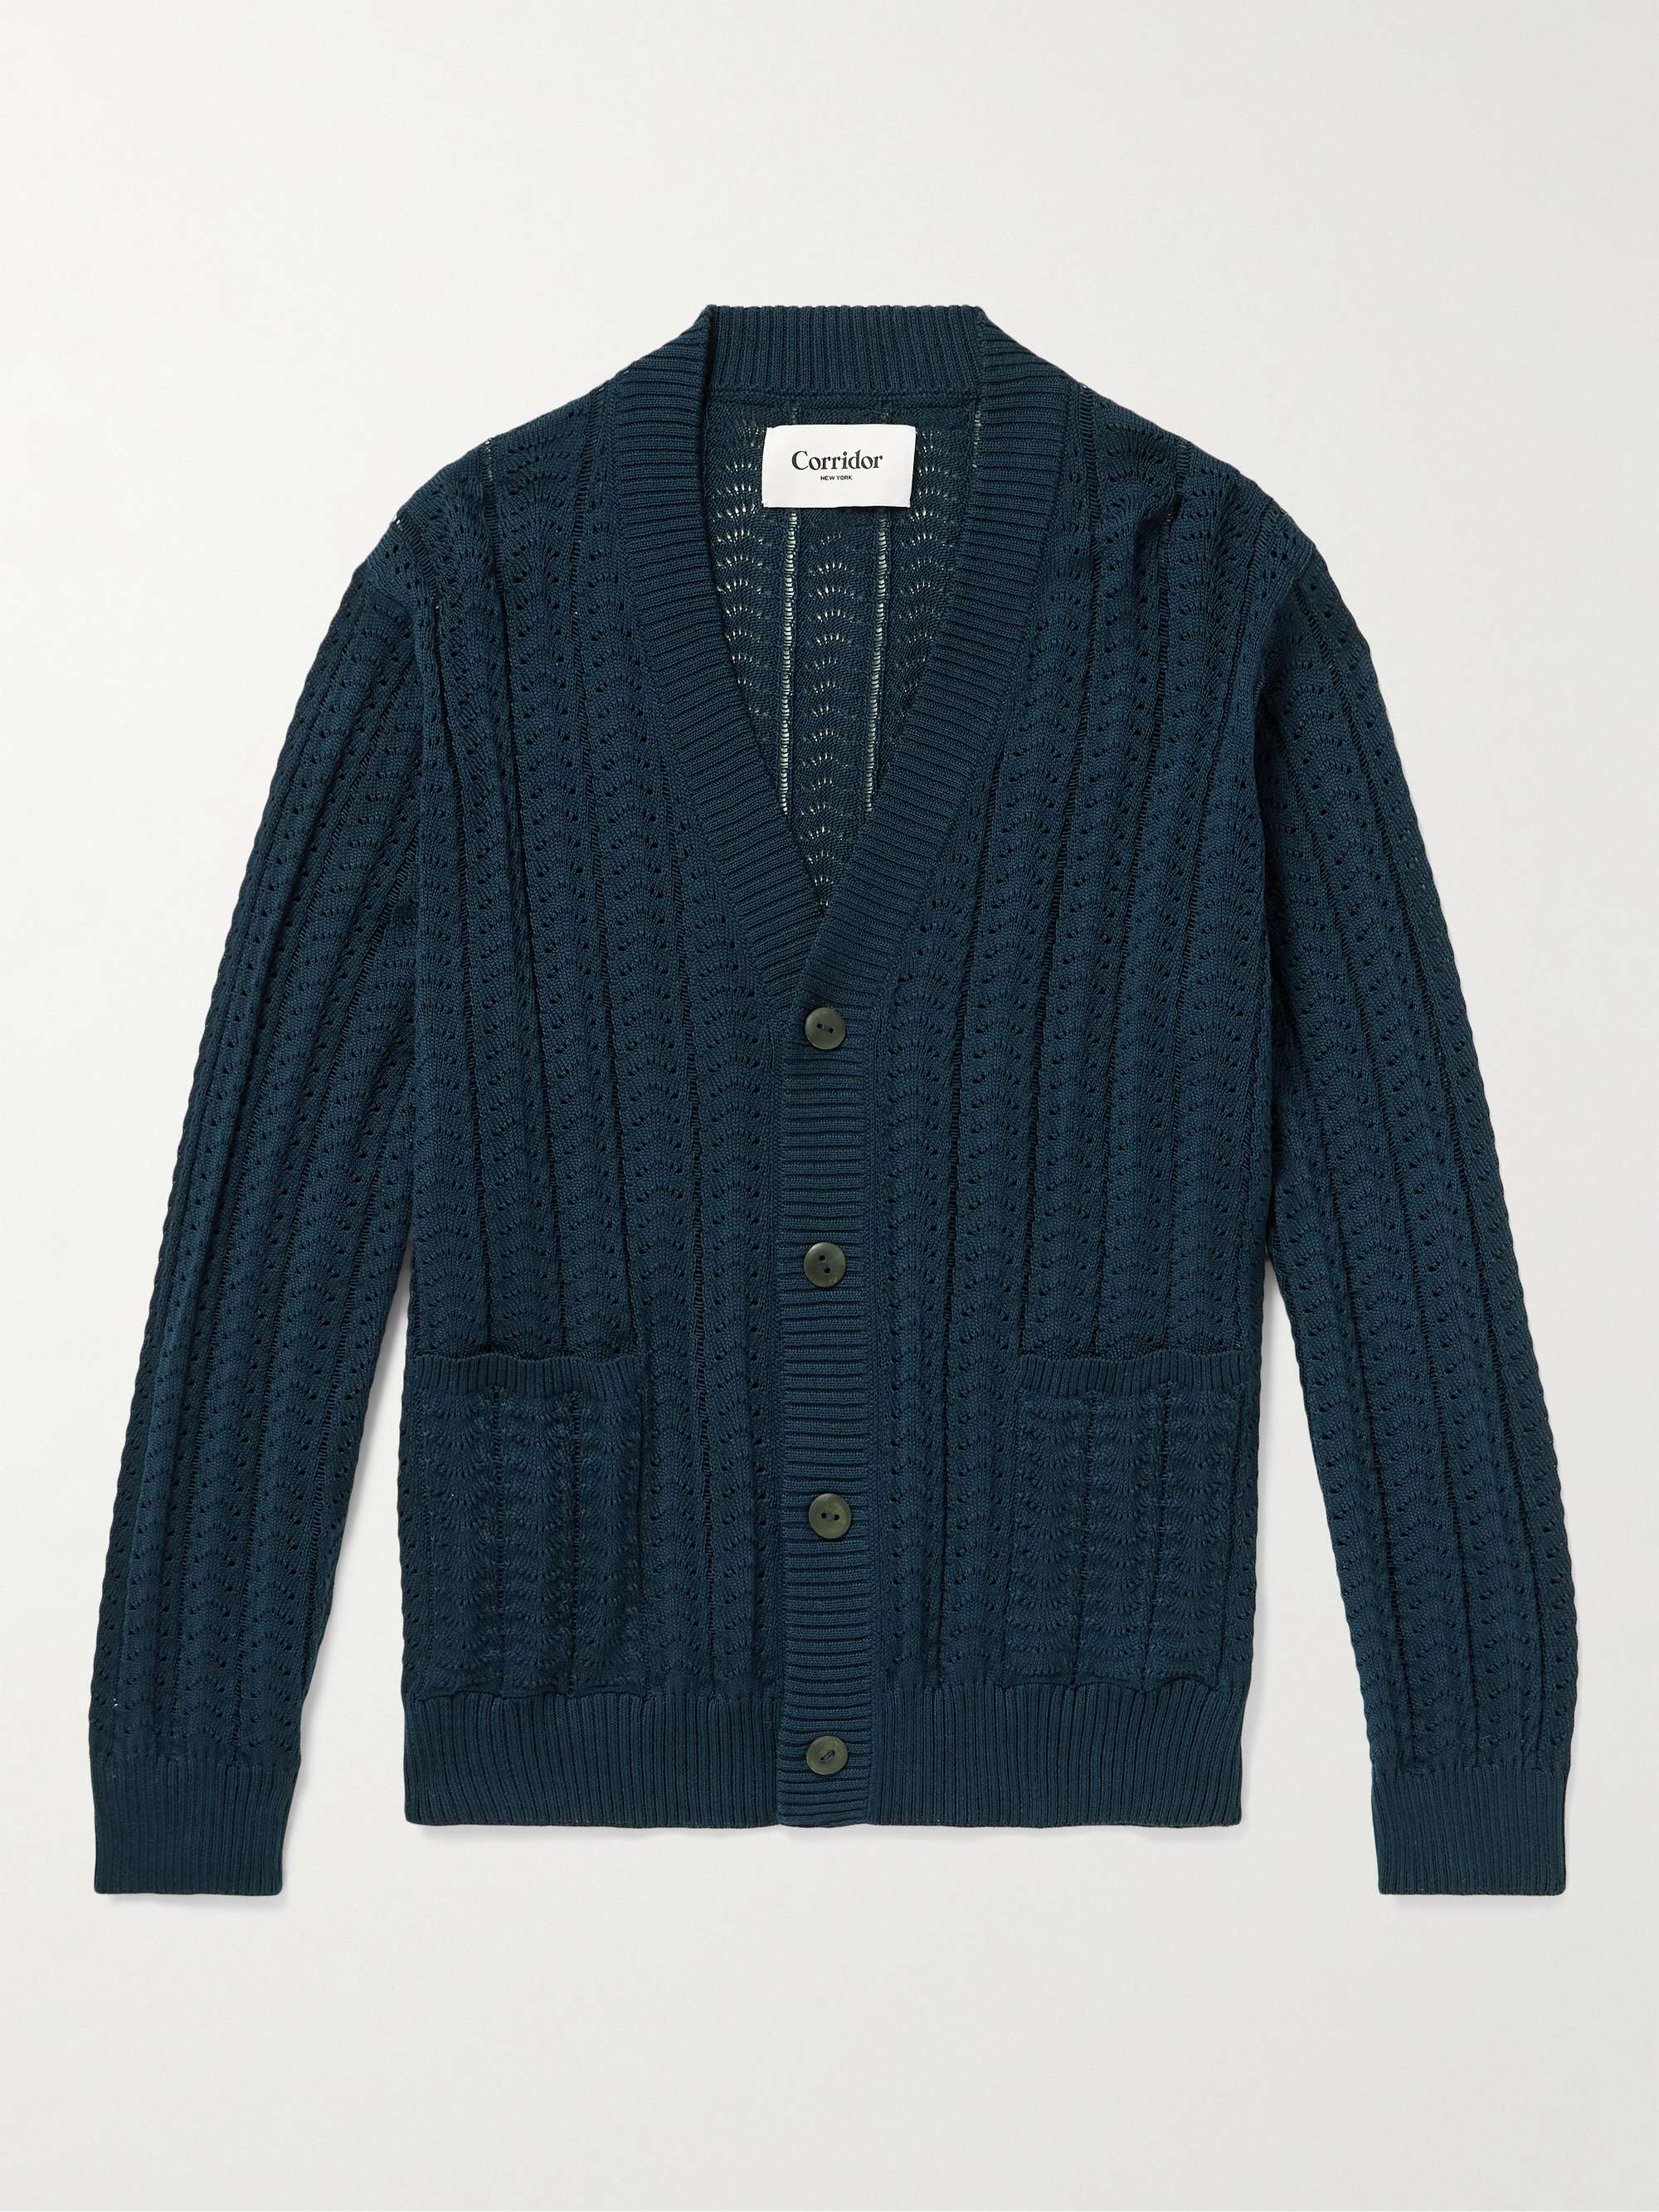 CORRIDOR Crocheted Pima Cotton Cardigan for Men | MR PORTER